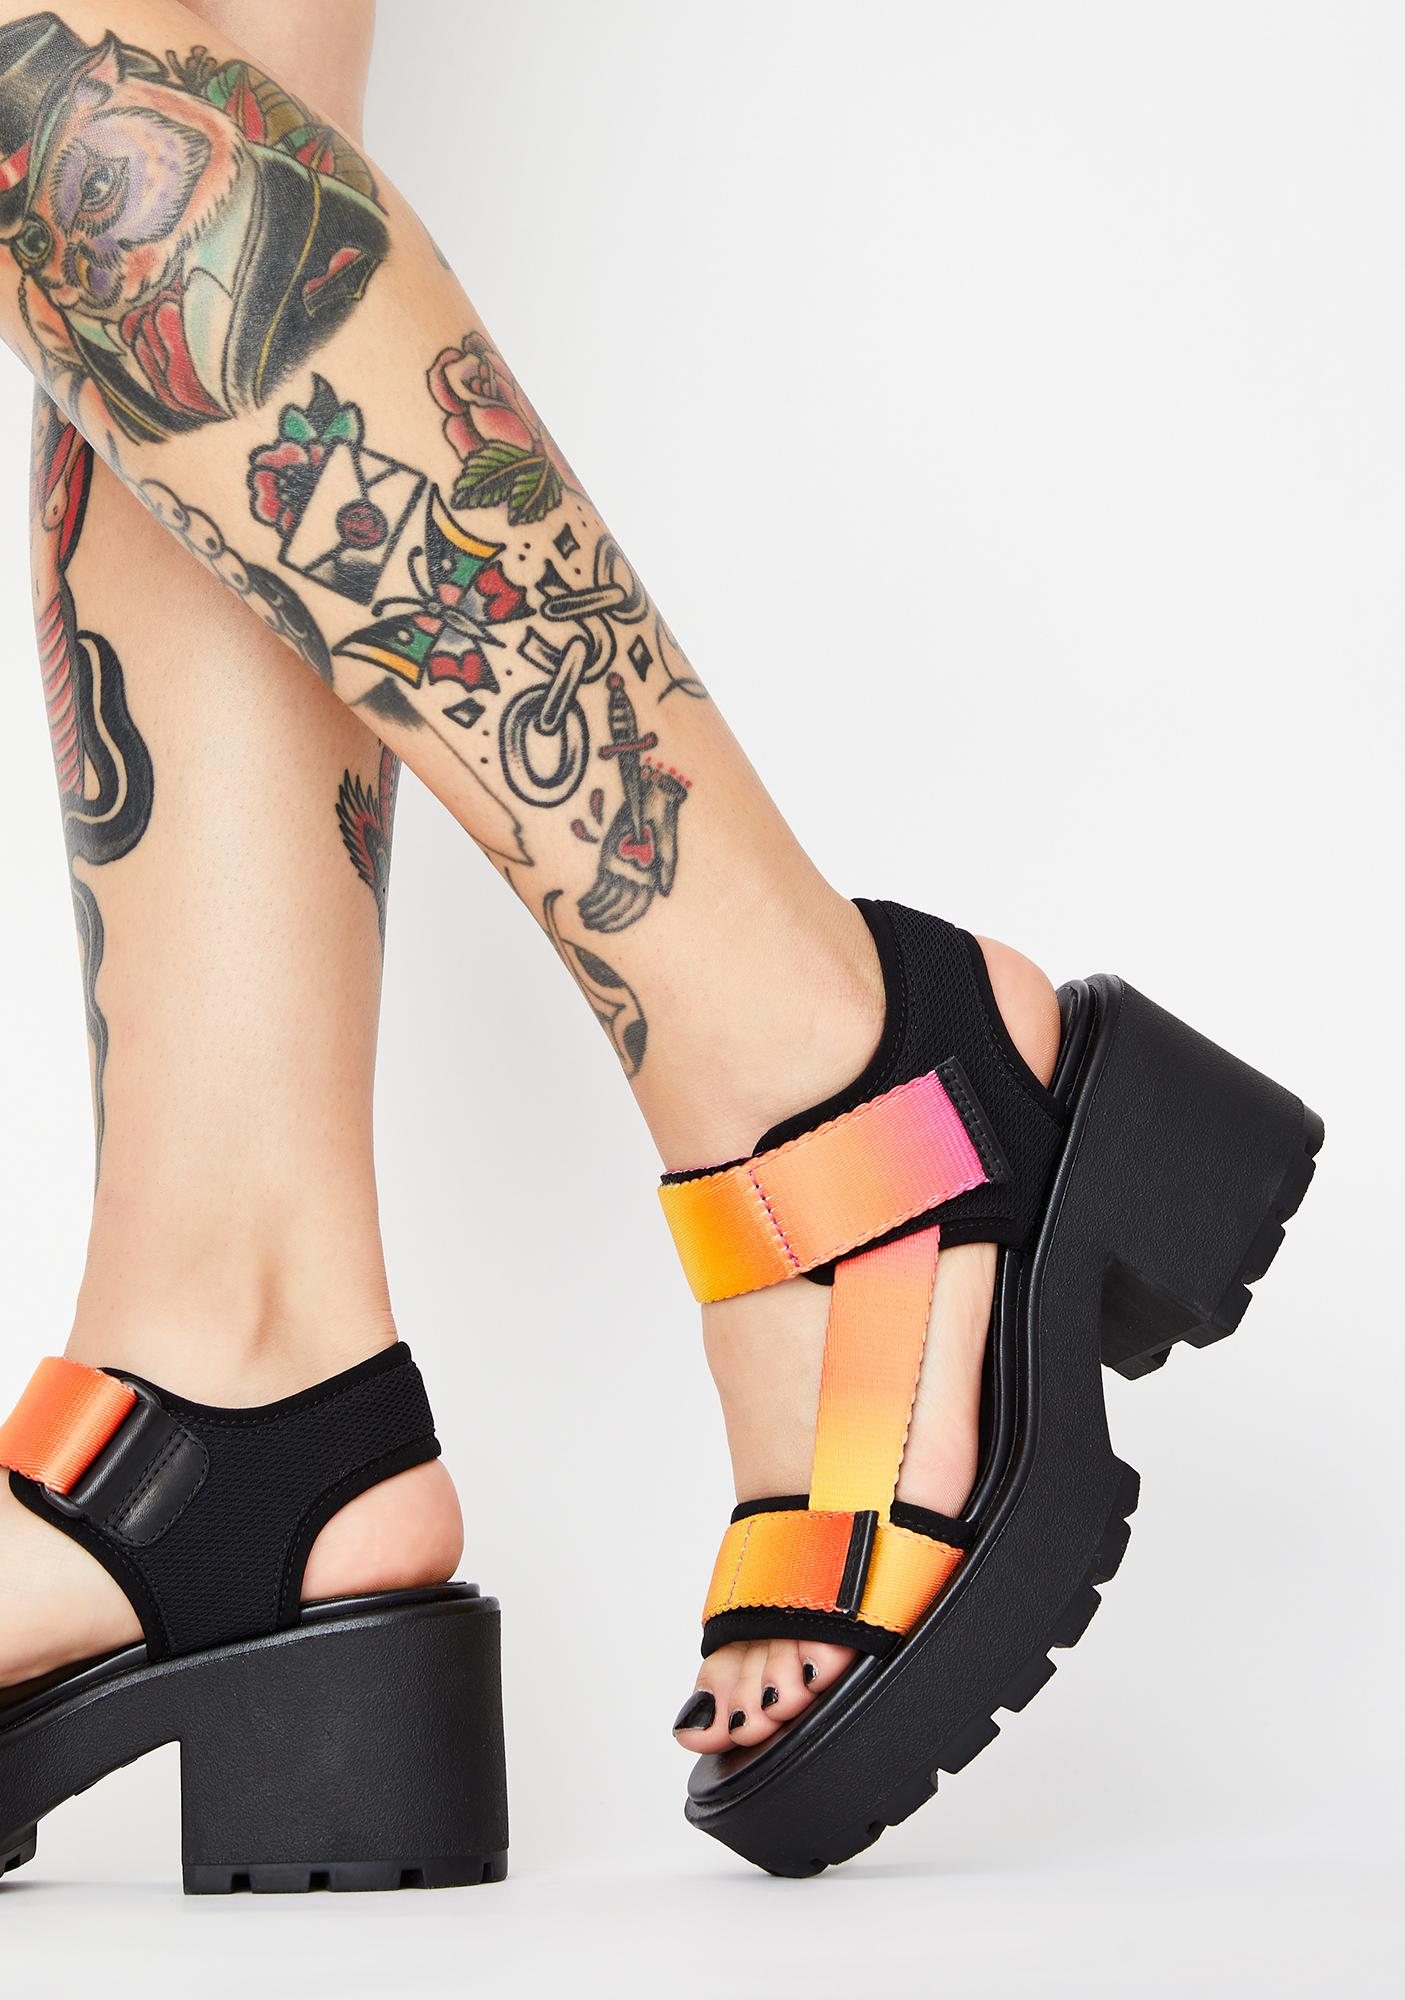 vagabond shoemakers dioon platform sandal